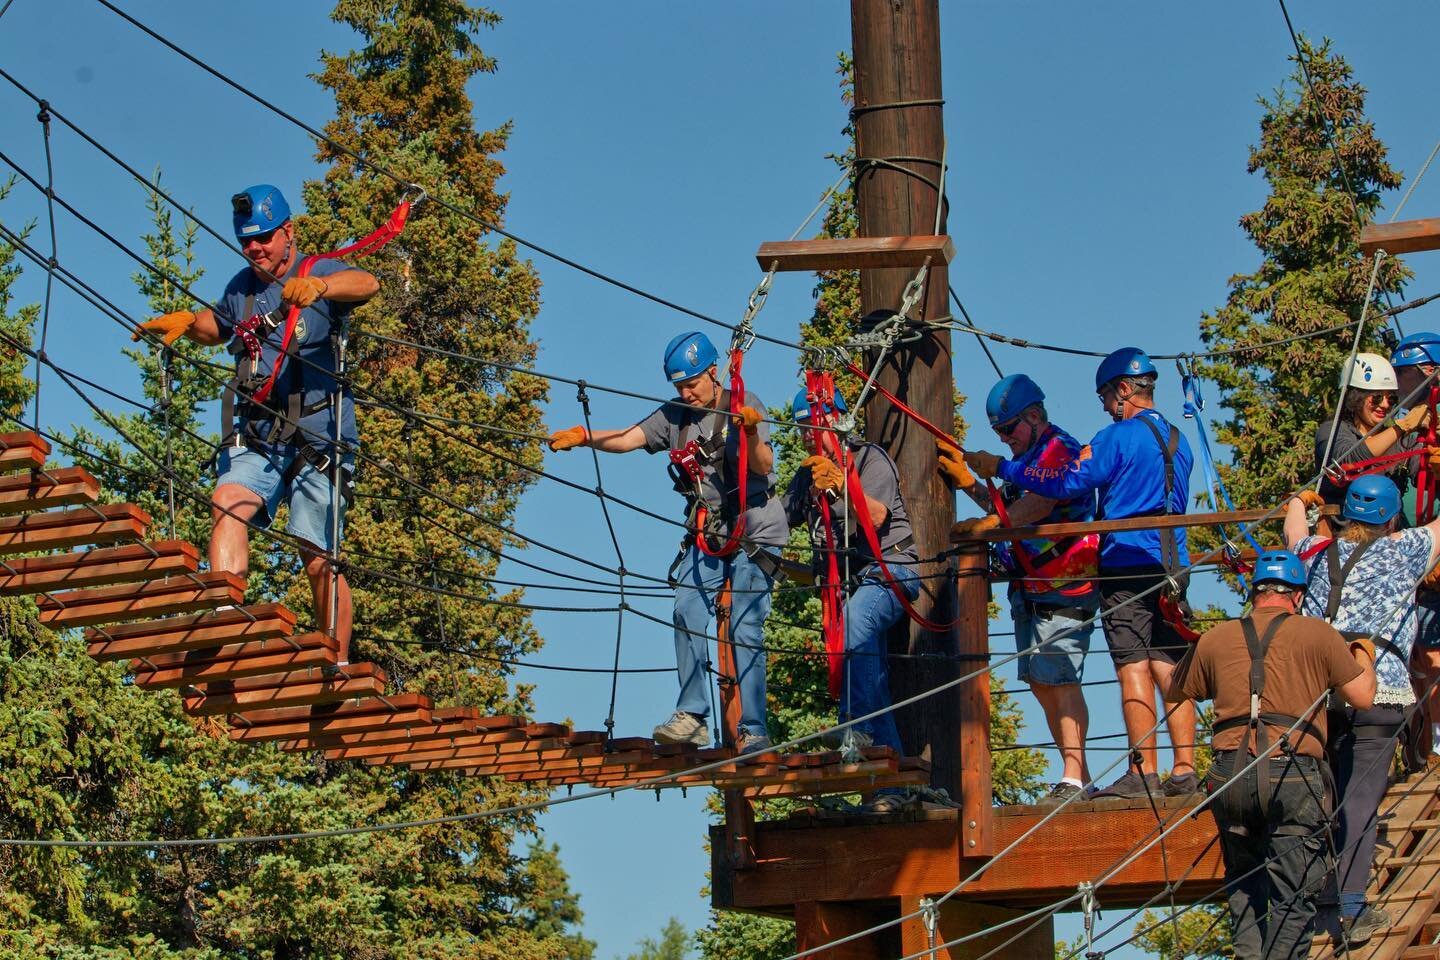 Not just Ziplines! Our course has 6 Skybridges for you to traverse! .
.
.
.
#zipline #alaska #travel #travelalaska #thingstodoinalaska #youneedalaska
#explorealaska #alaskanadventures #alaskavaction #findyouralaska
#sharingalaska #thelastfrontier #th